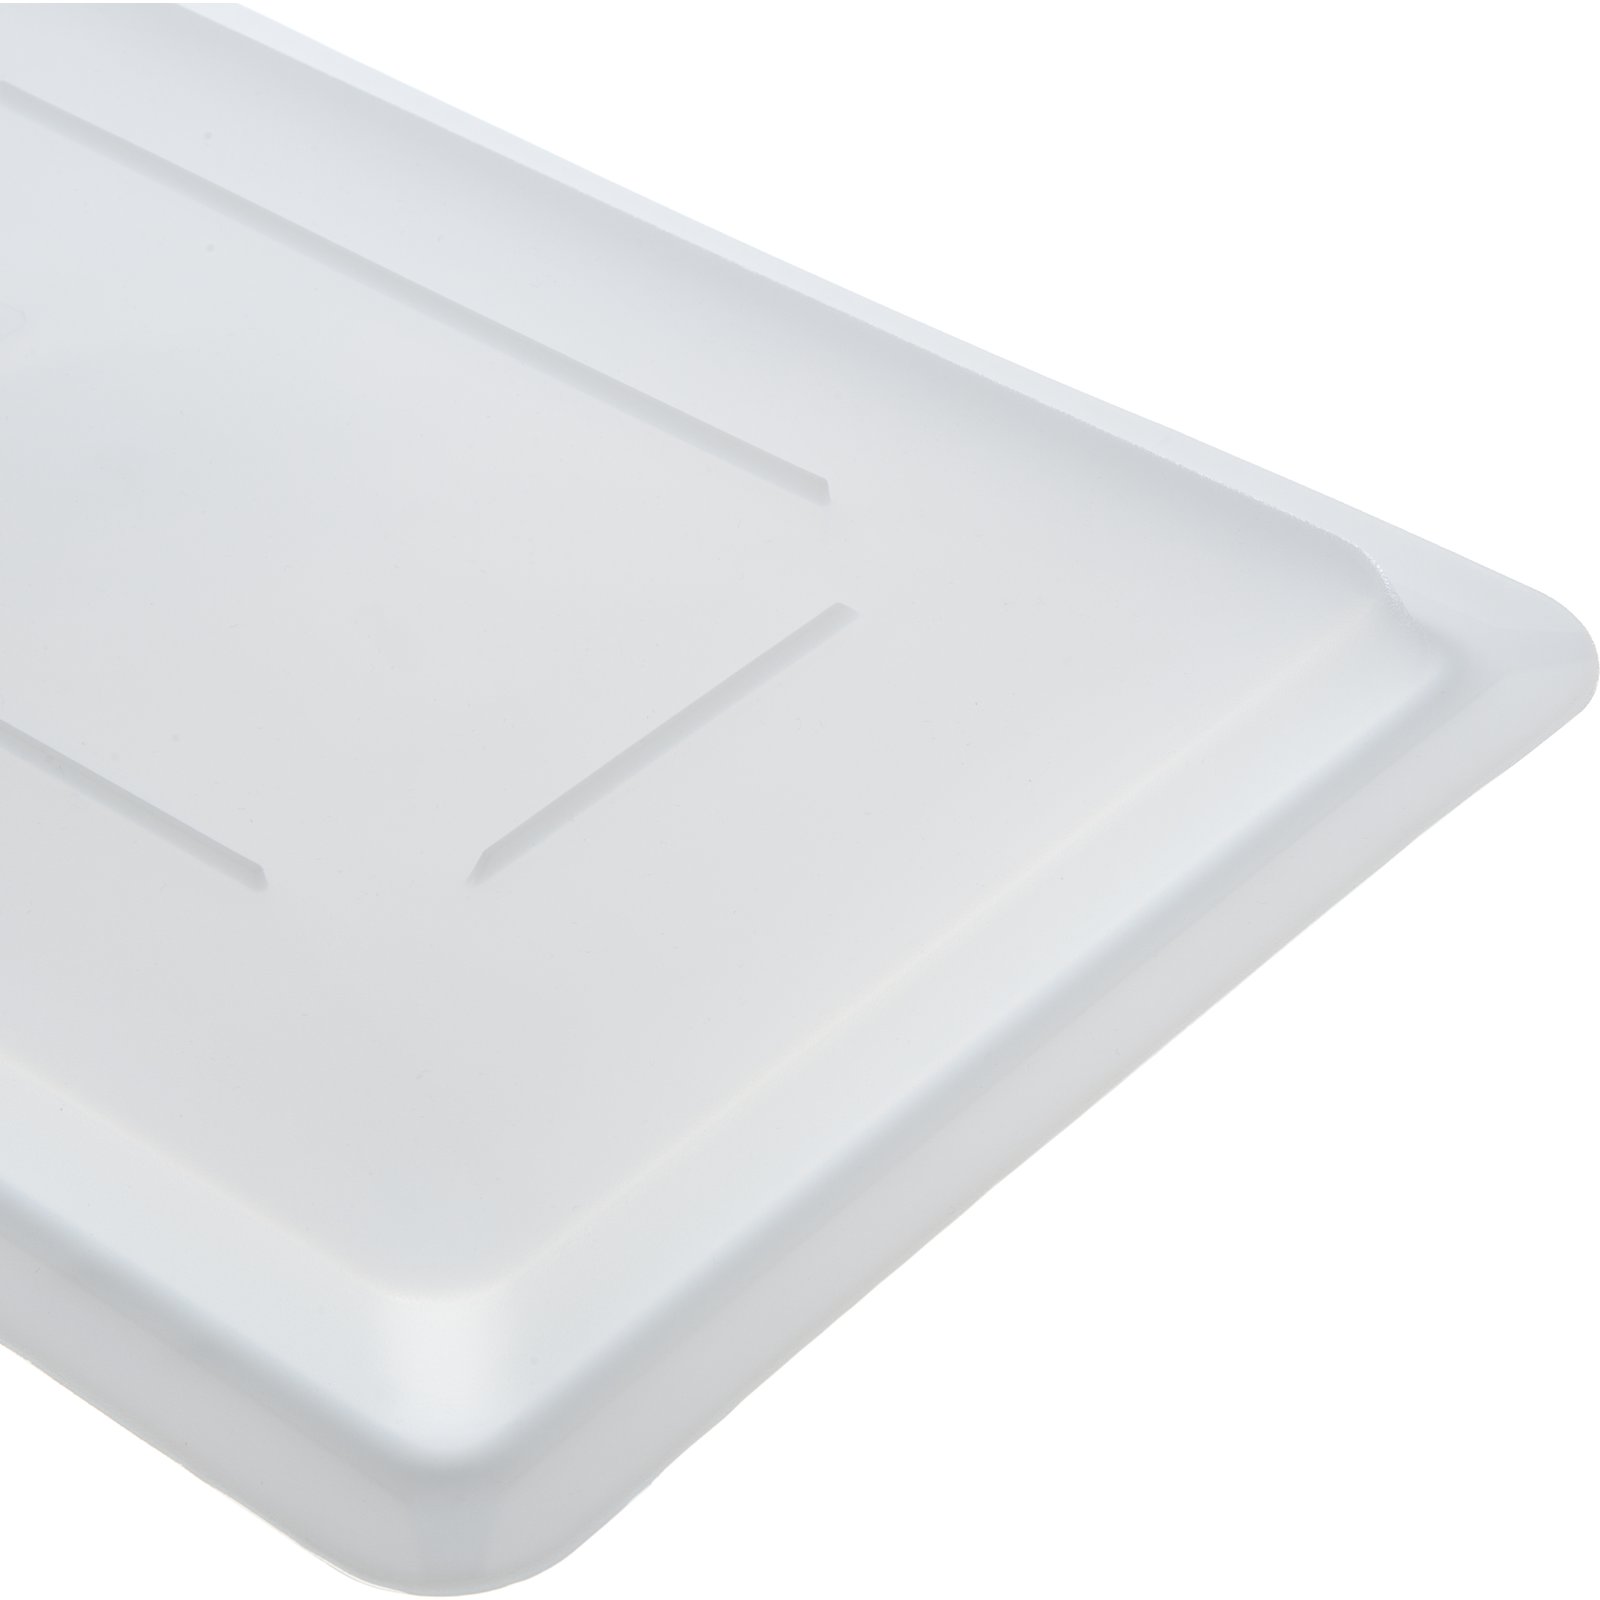 1063702 - StorPlus™ Polyethylene Food Storage Container Lock-Tight Lid  18 x 12 - White